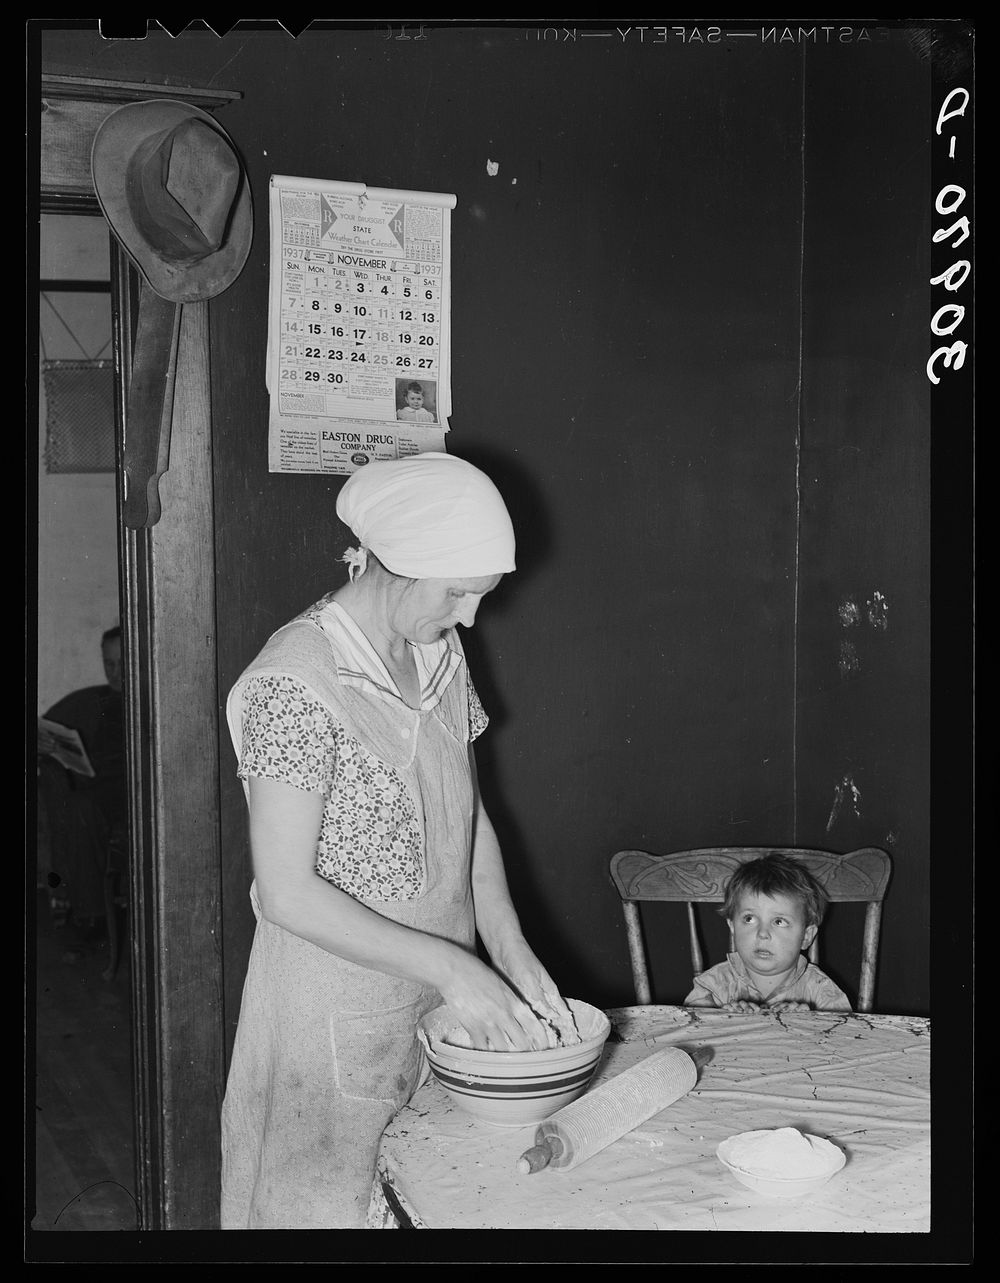 Mrs. Baker, wife of farmer, kneading dough near Ambrose, North Dakota by Russell Lee